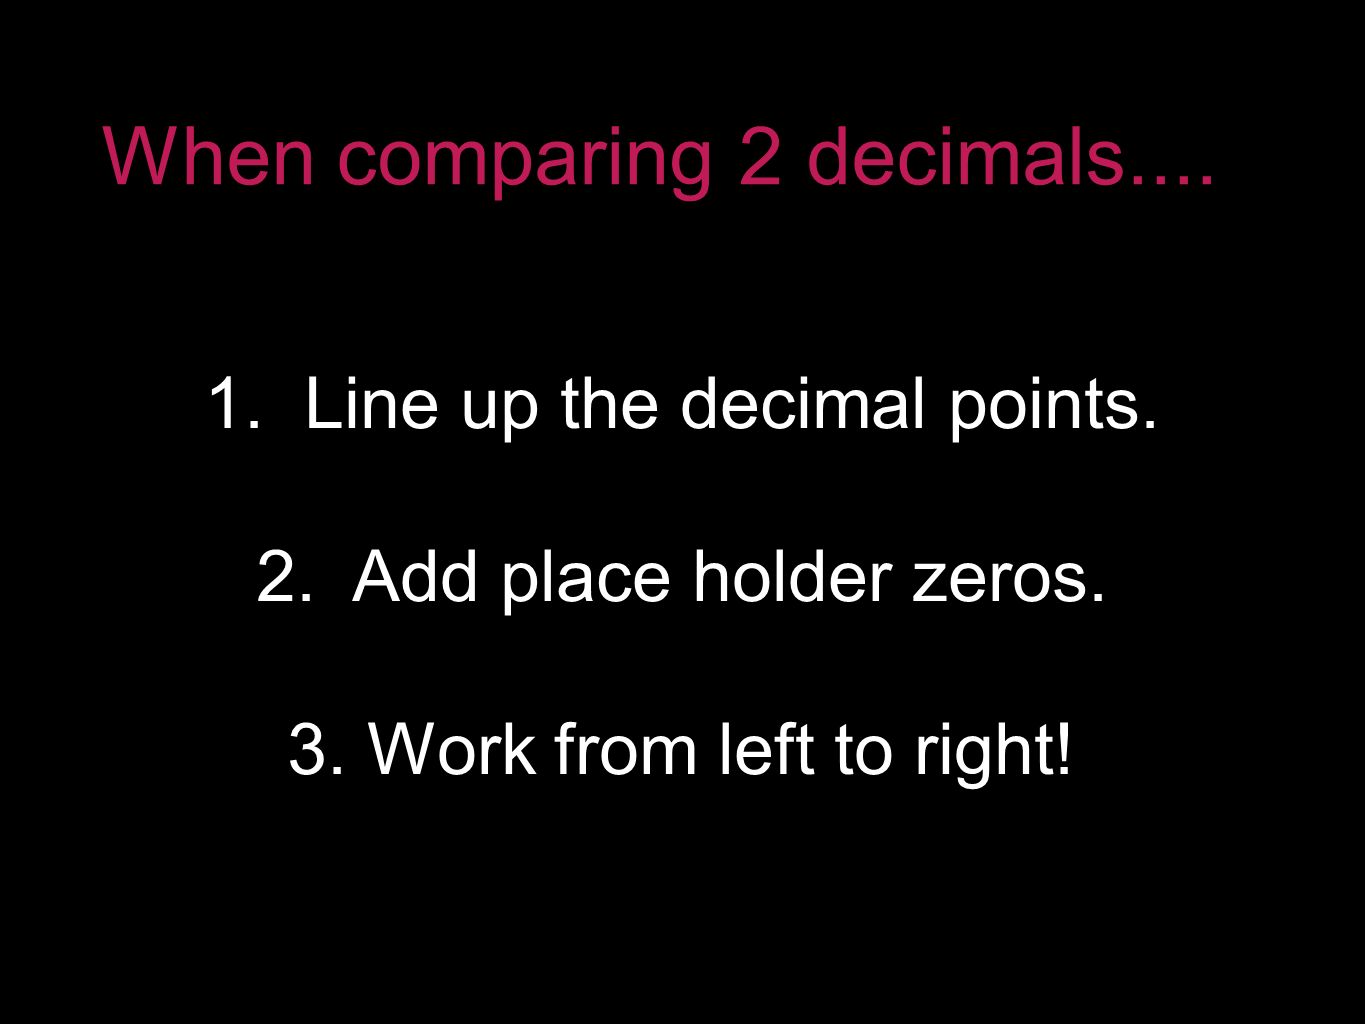 When comparing 2 decimals Line up the decimal points.